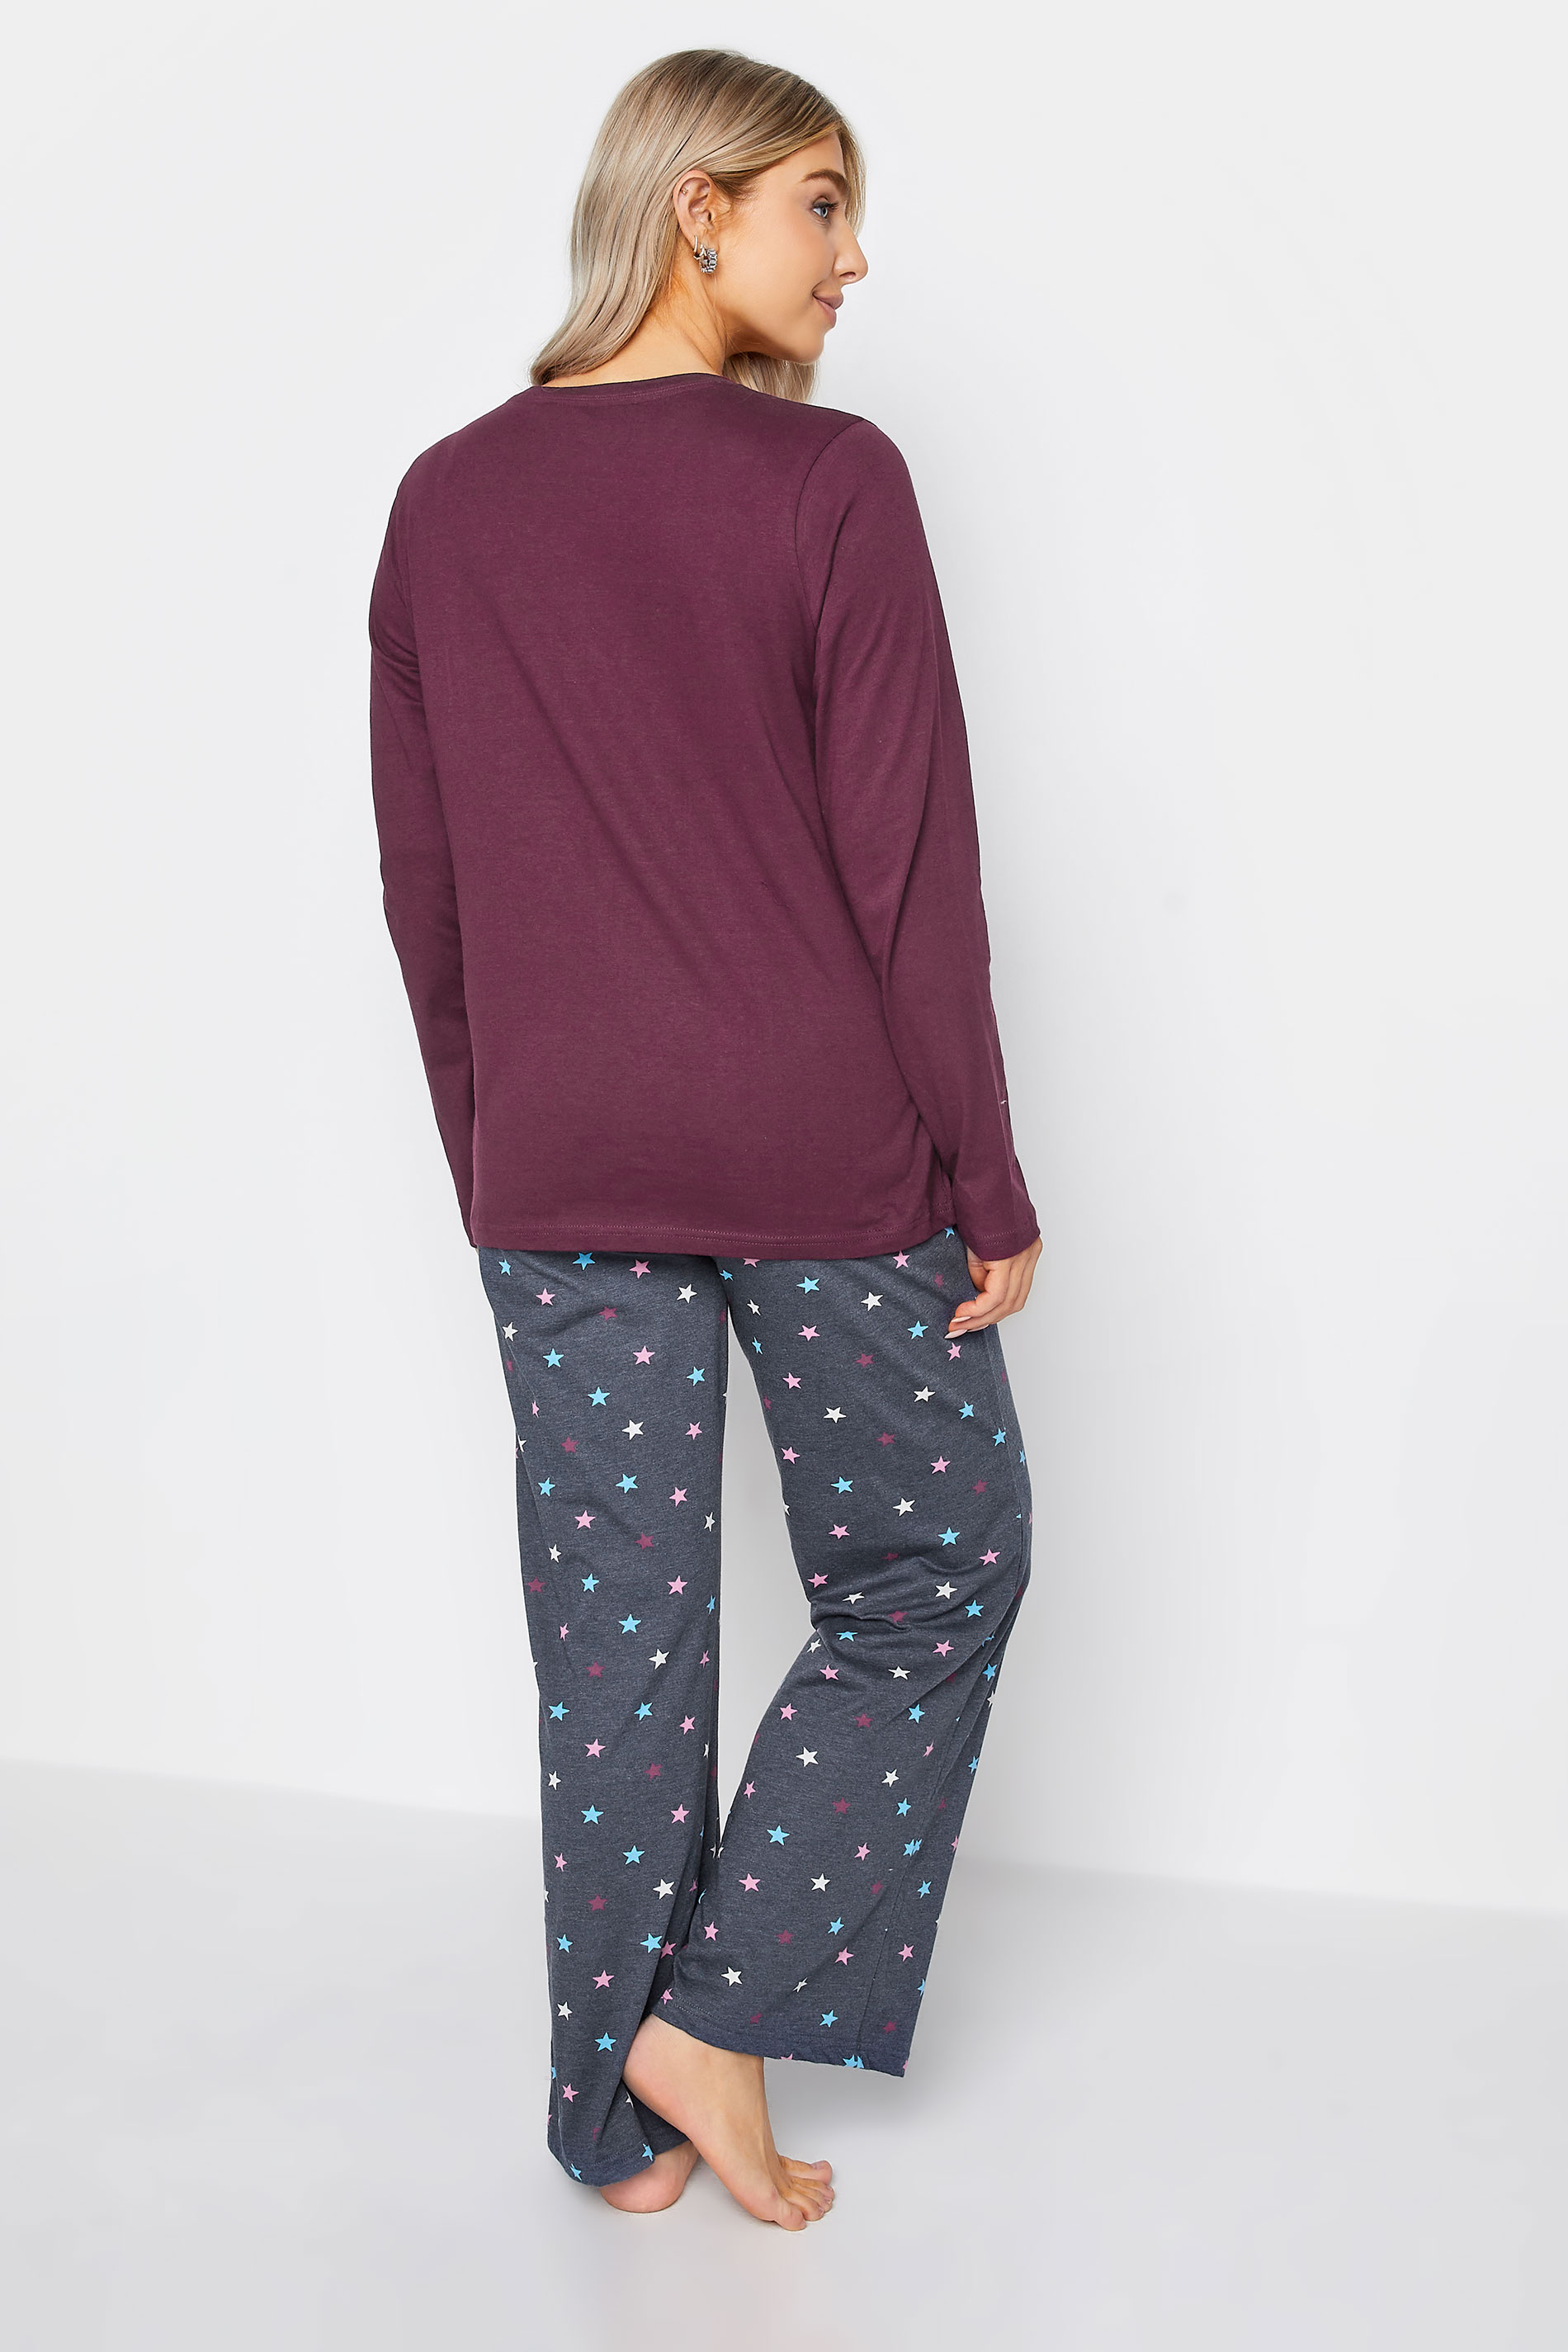 M&Co Purple Cotton 'Look to the Stars' Wide Leg Pyjama Set | M&Co 3